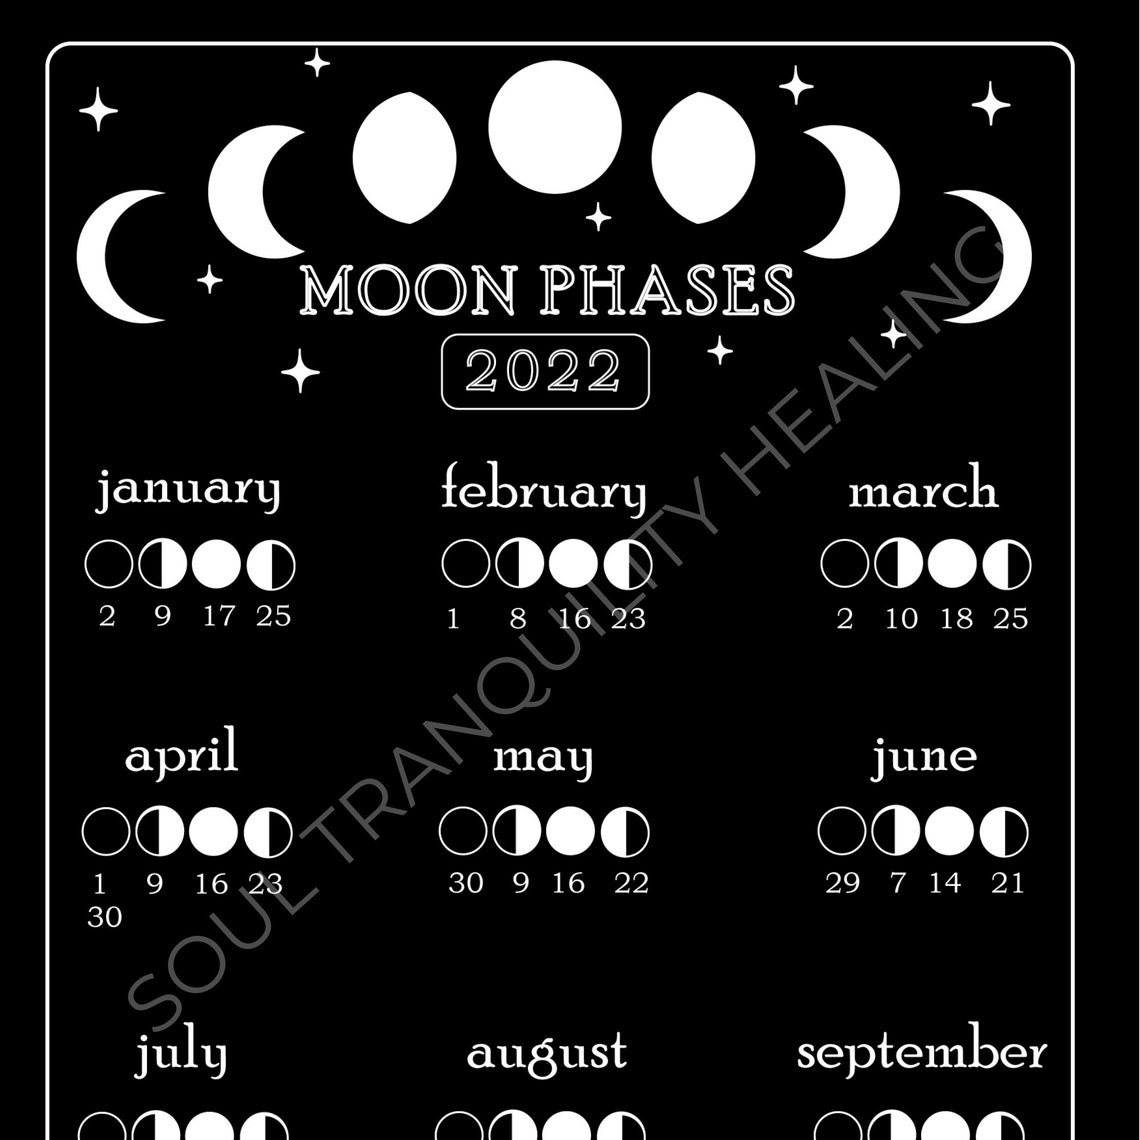 Lunar Calendar 365 Days And Moon Phases Calendar 2022 Moon | Etsy throughout Full Moon Calendar 2022 Printable